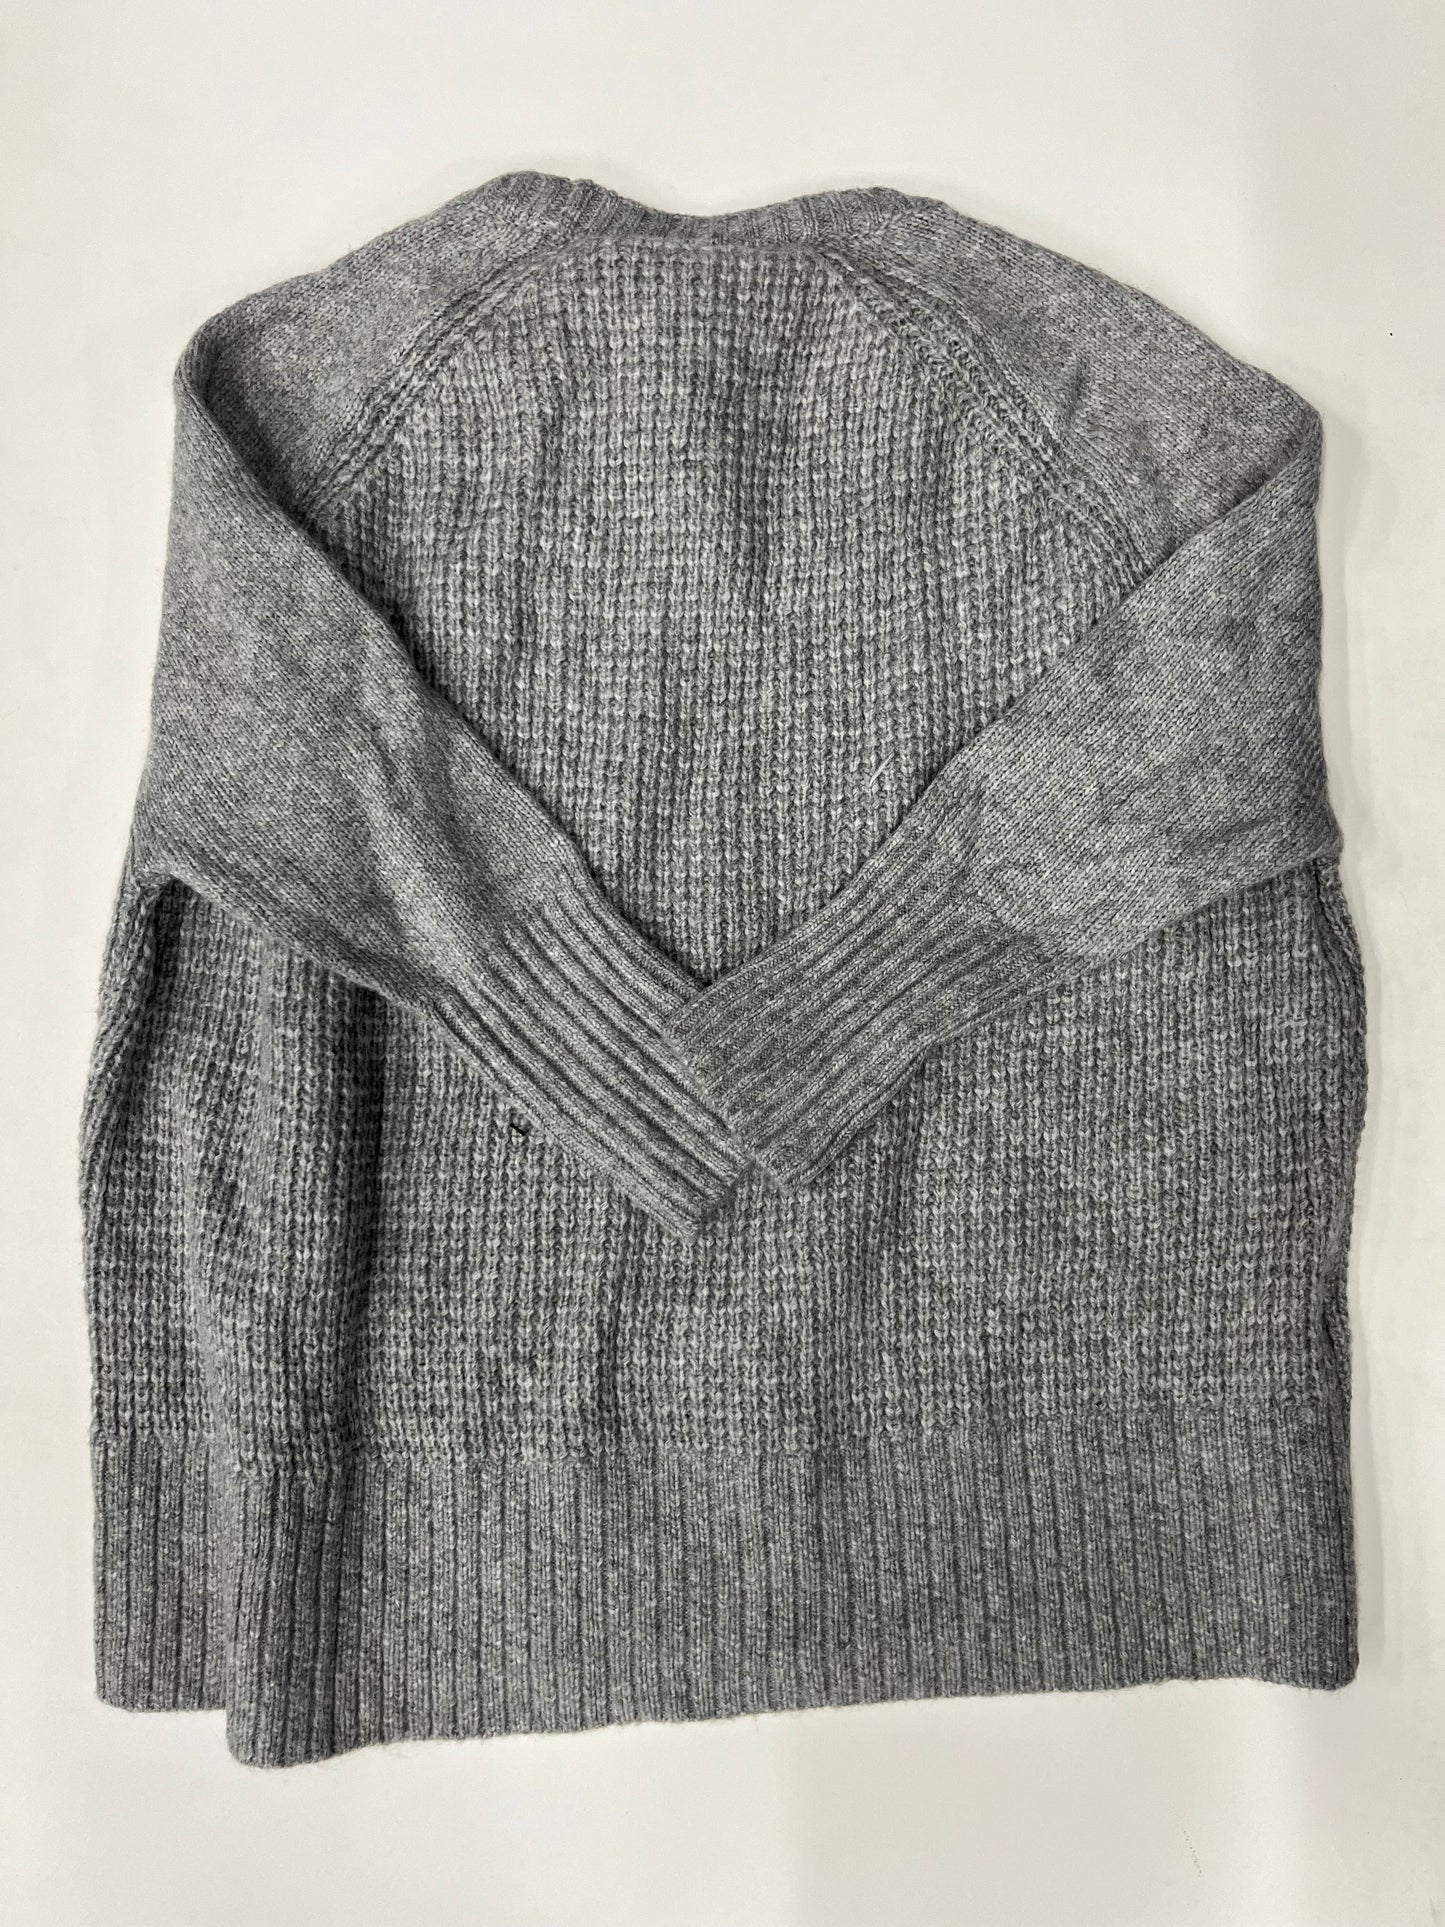 Sweater By Loft NWT Size: Xs